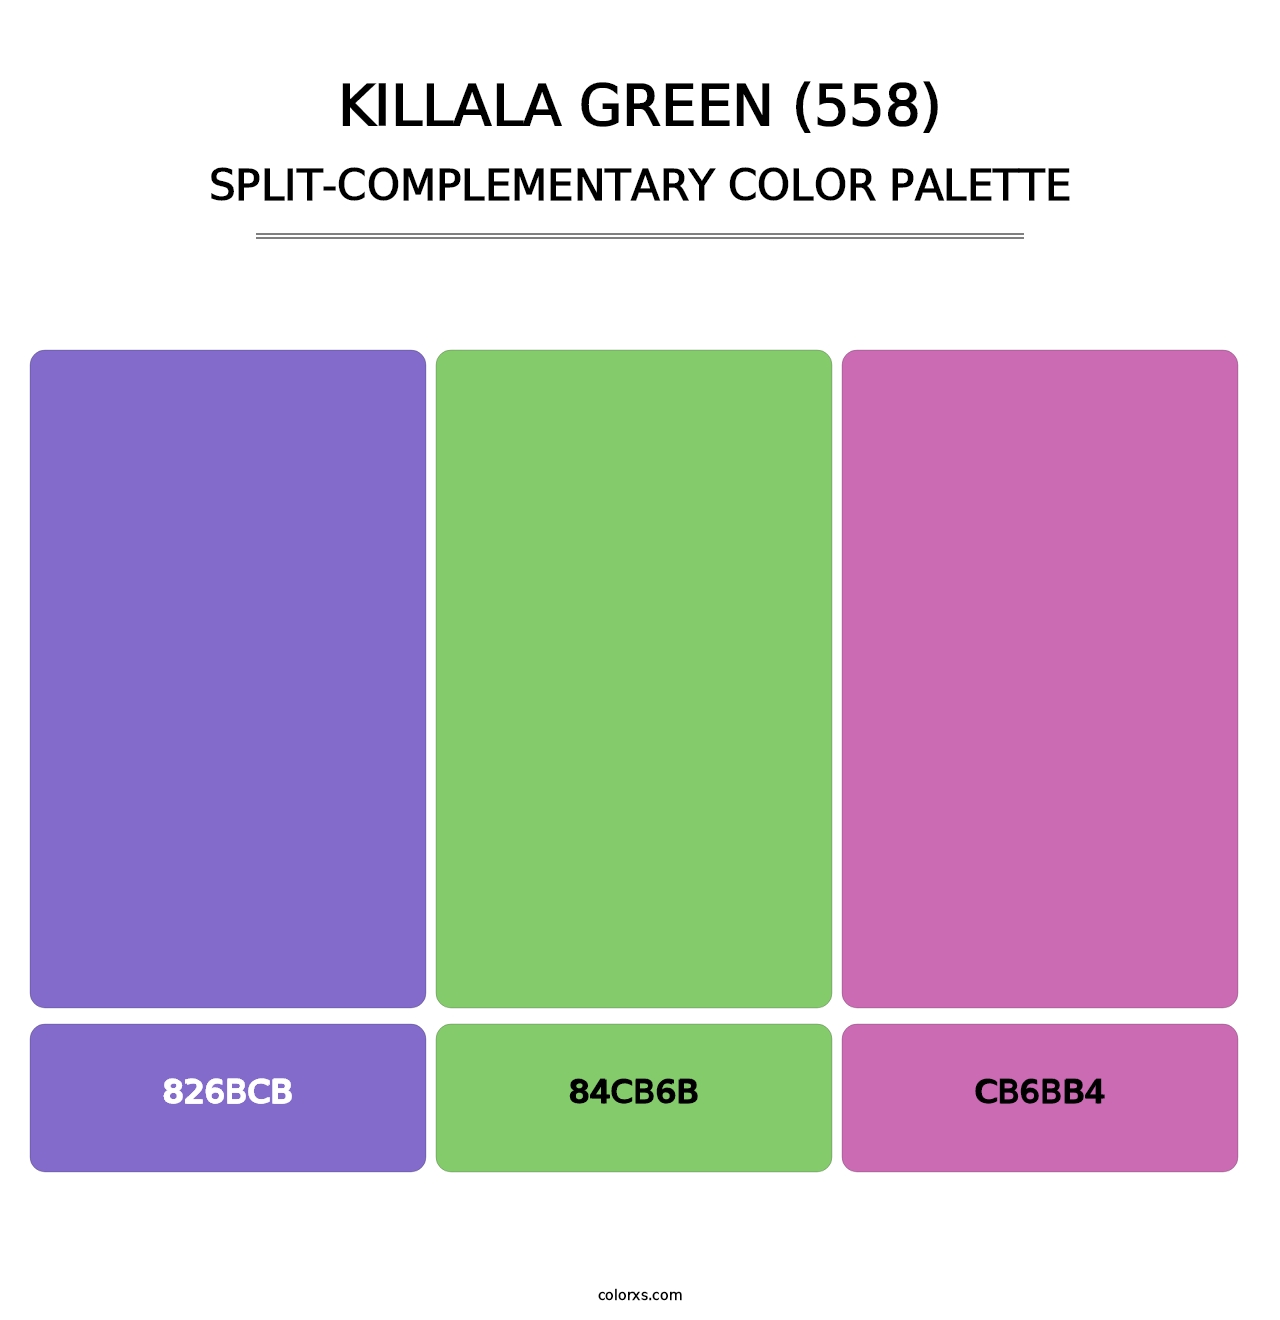 Killala Green (558) - Split-Complementary Color Palette